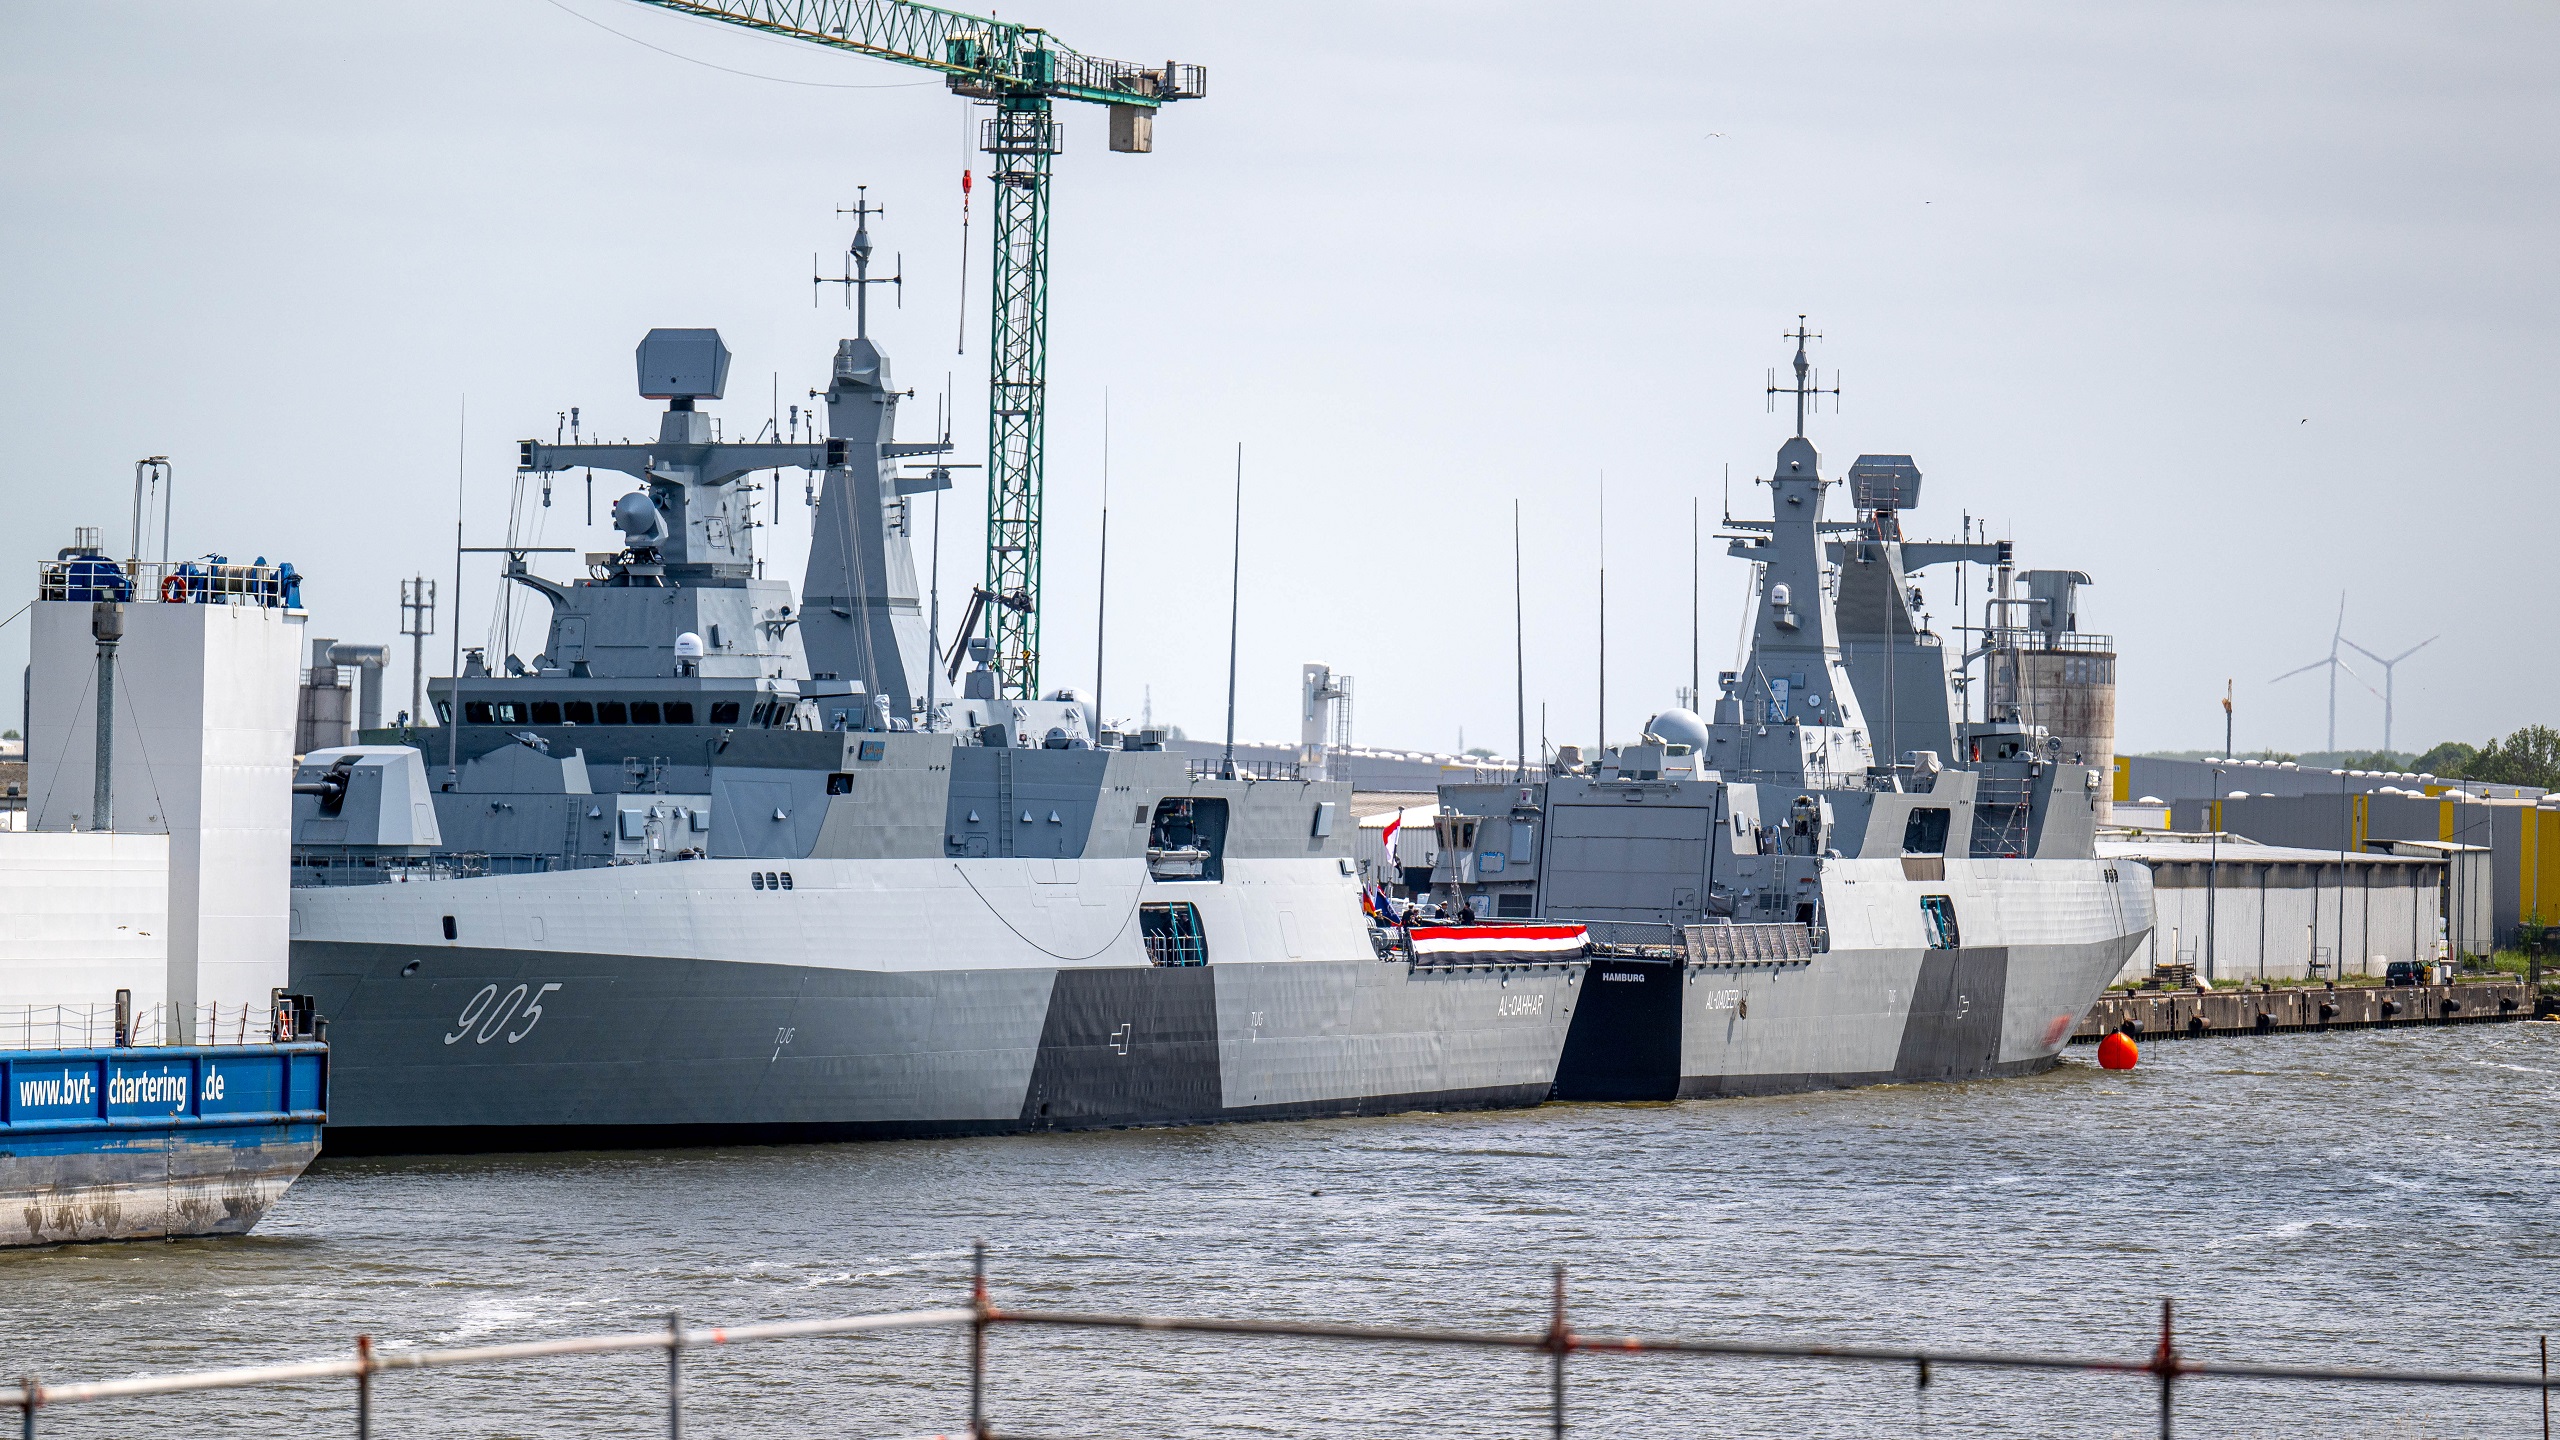 Egypt Enhances Naval Fleet With New German-Made Frigate ‘Al-Qadeer’